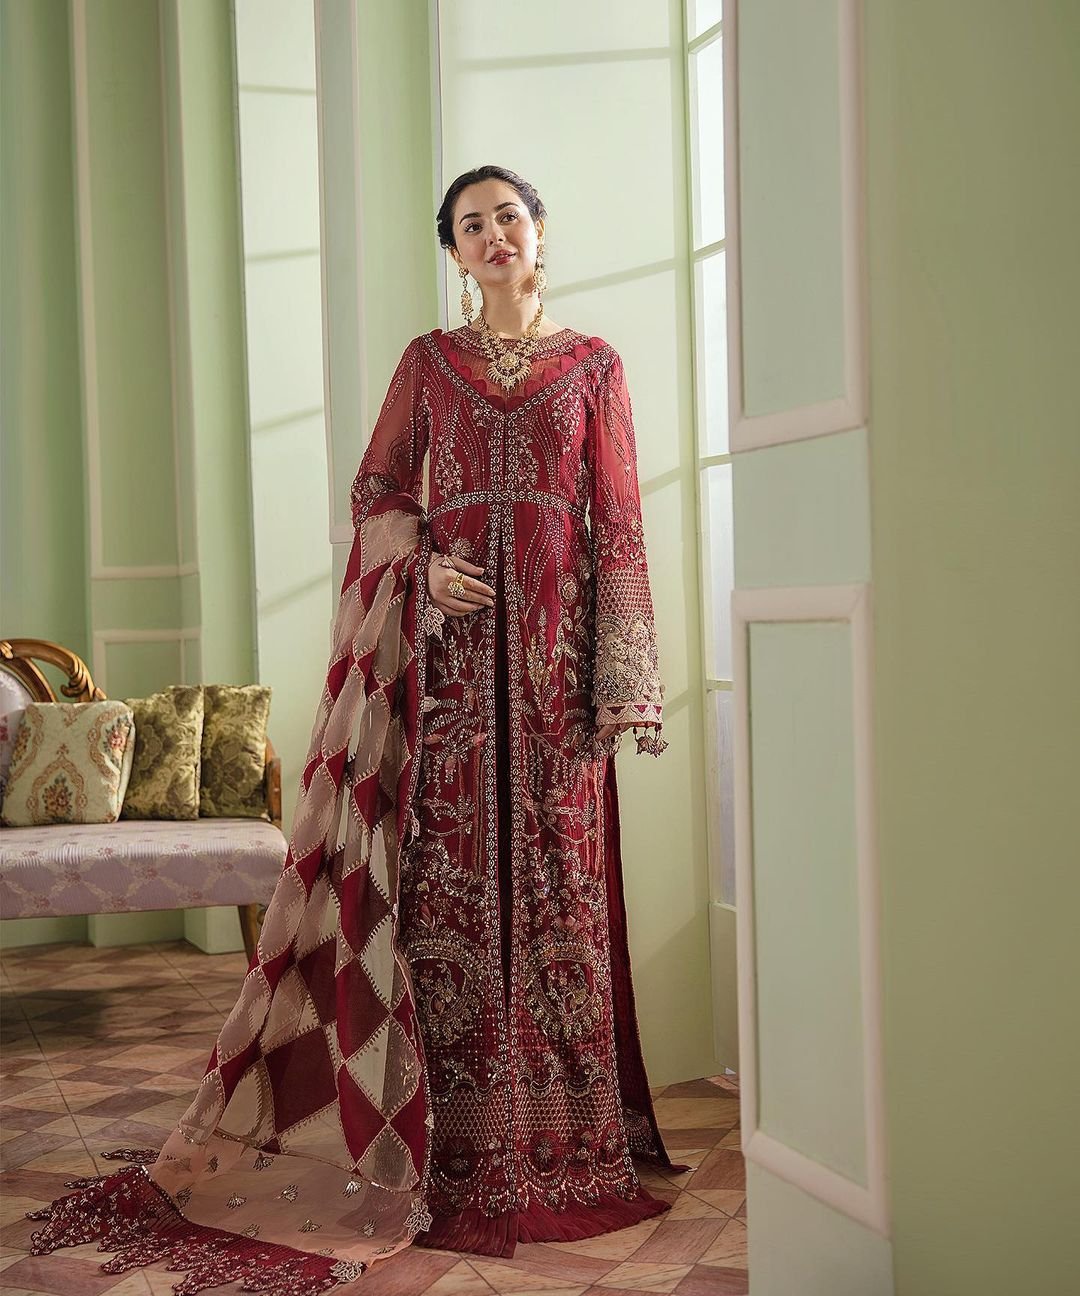 Hania Aamir looks Ravishing in Latest Shoot